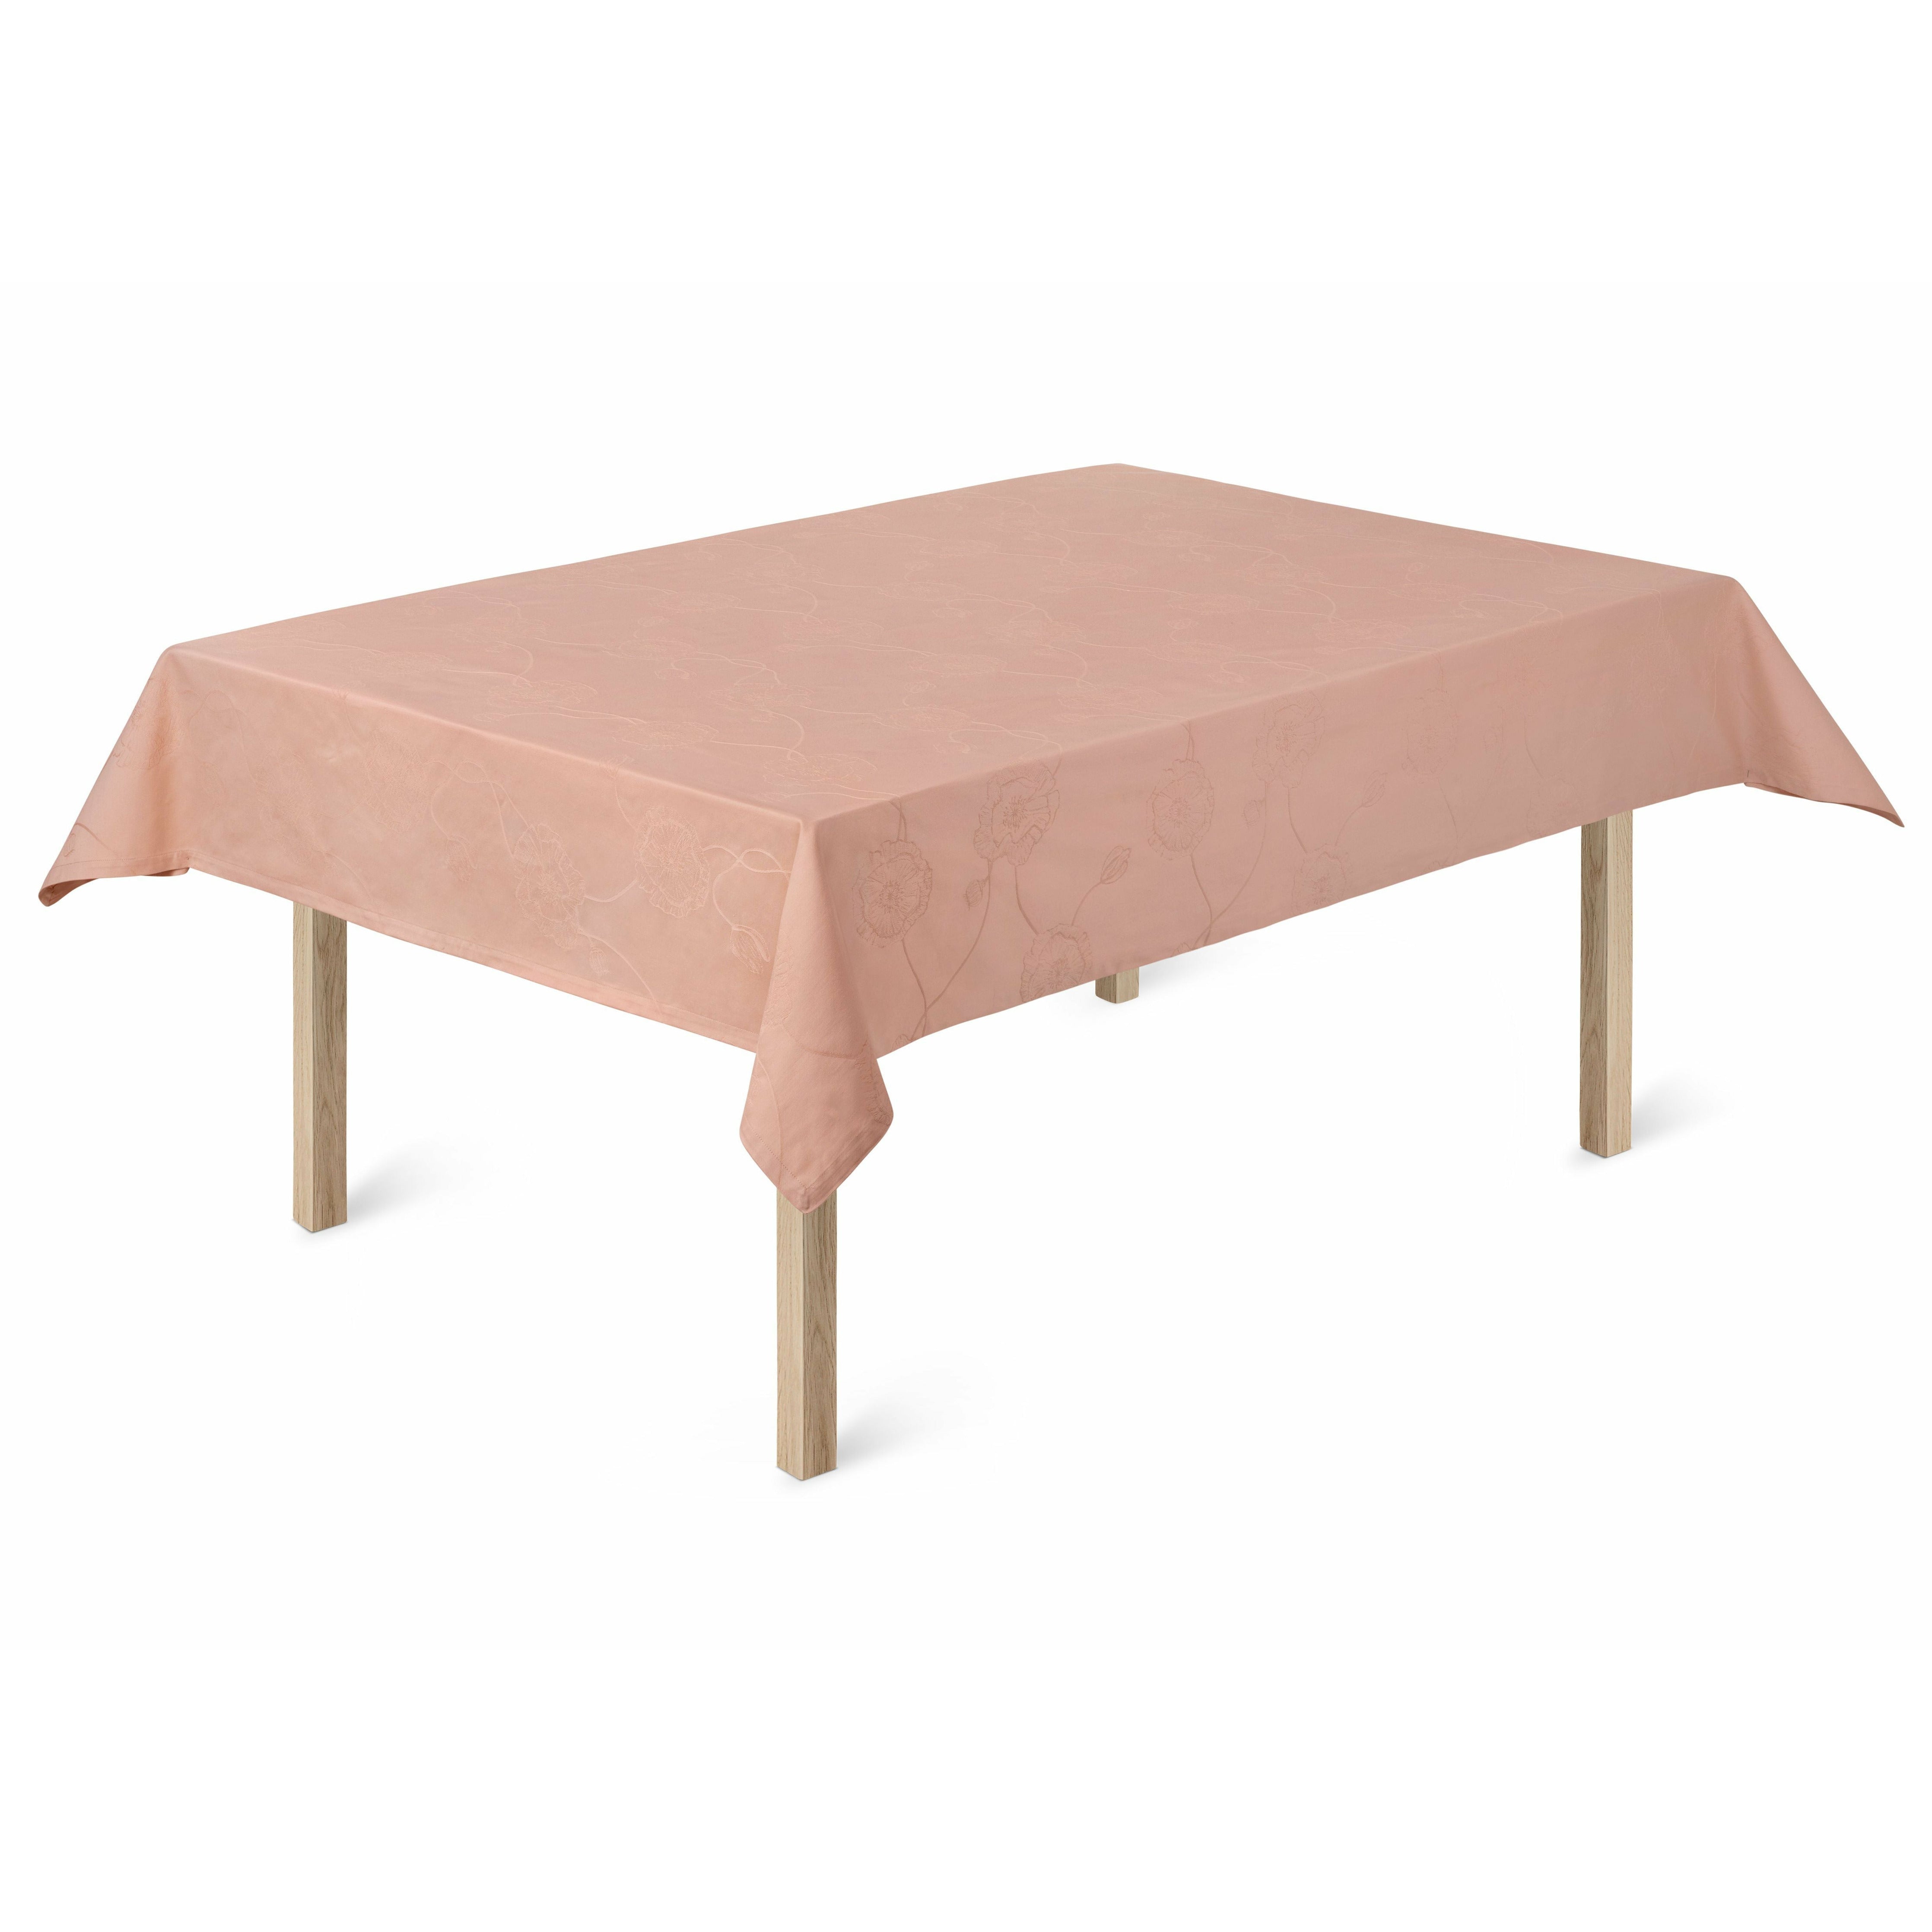 Kähler Hammershøi Poppy Table Doek 150x220 cm, naakt